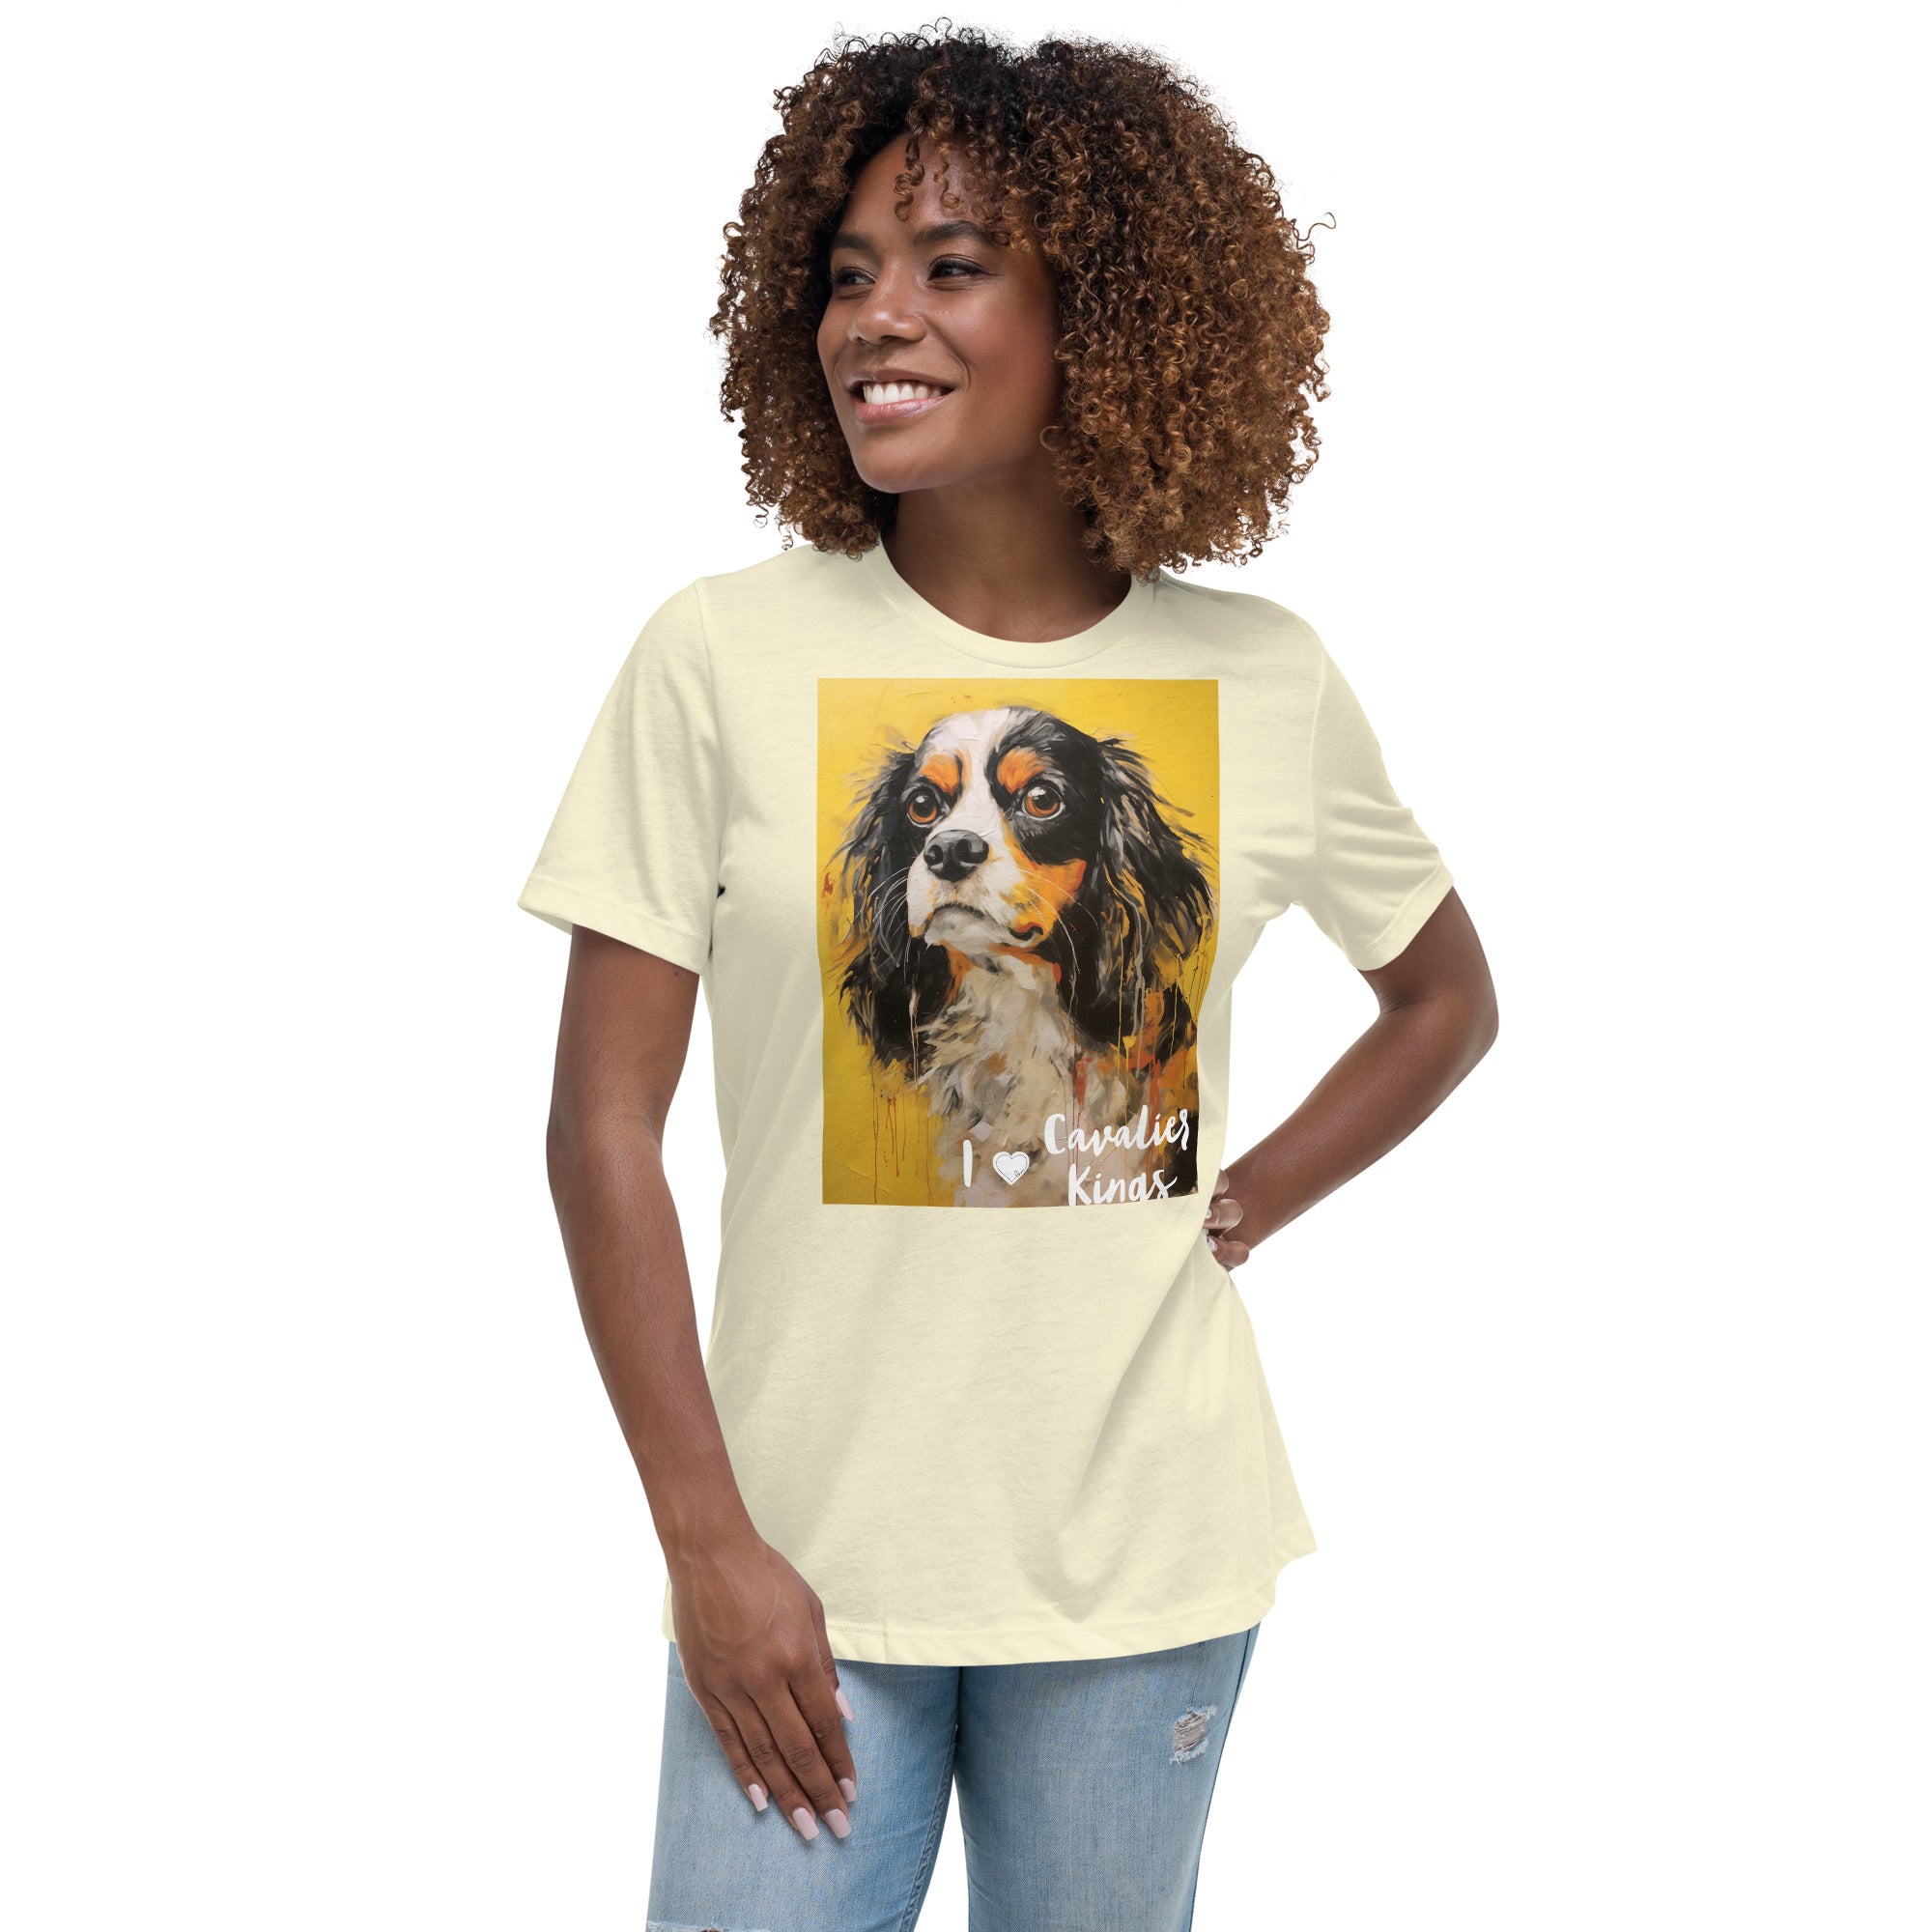 Women's Relaxed T-Shirt - I ❤ Dogs - Cavalier King Charles Spaniel